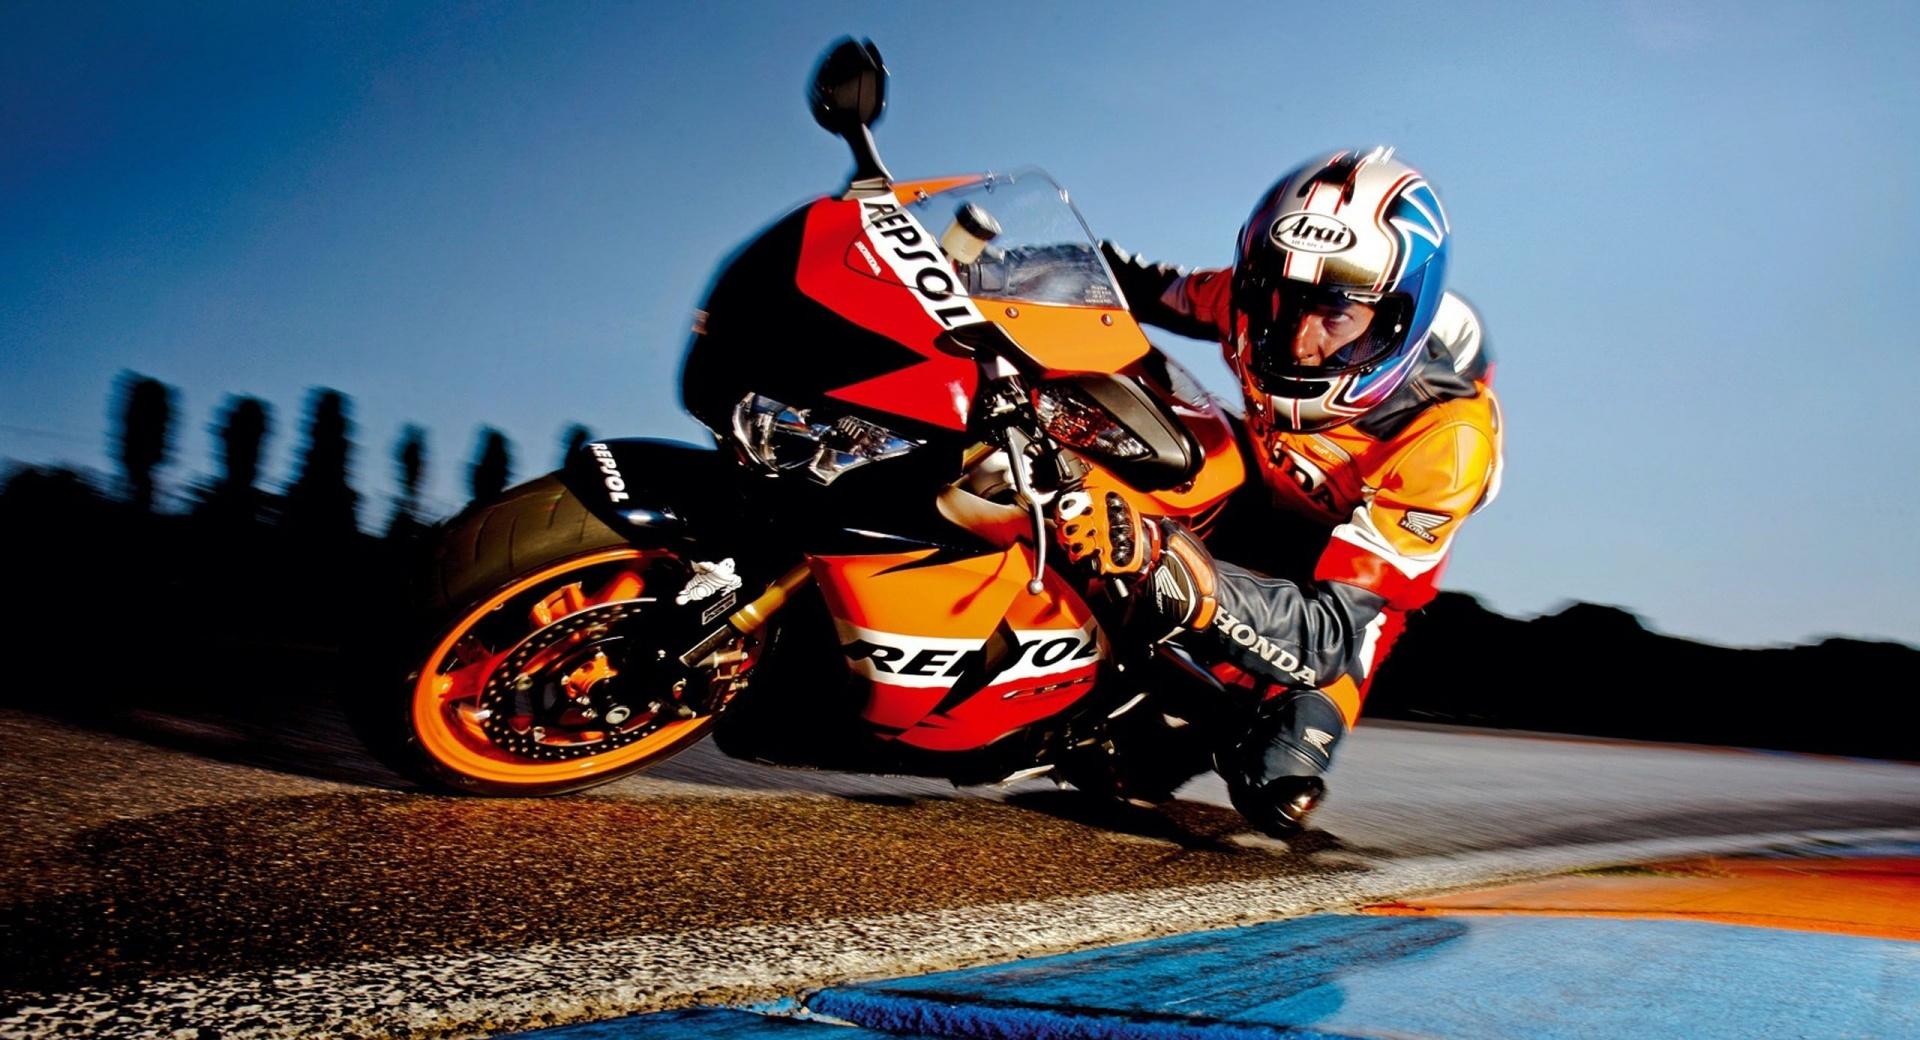 Honda Motorcycle Racing at 1280 x 960 size wallpapers HD quality